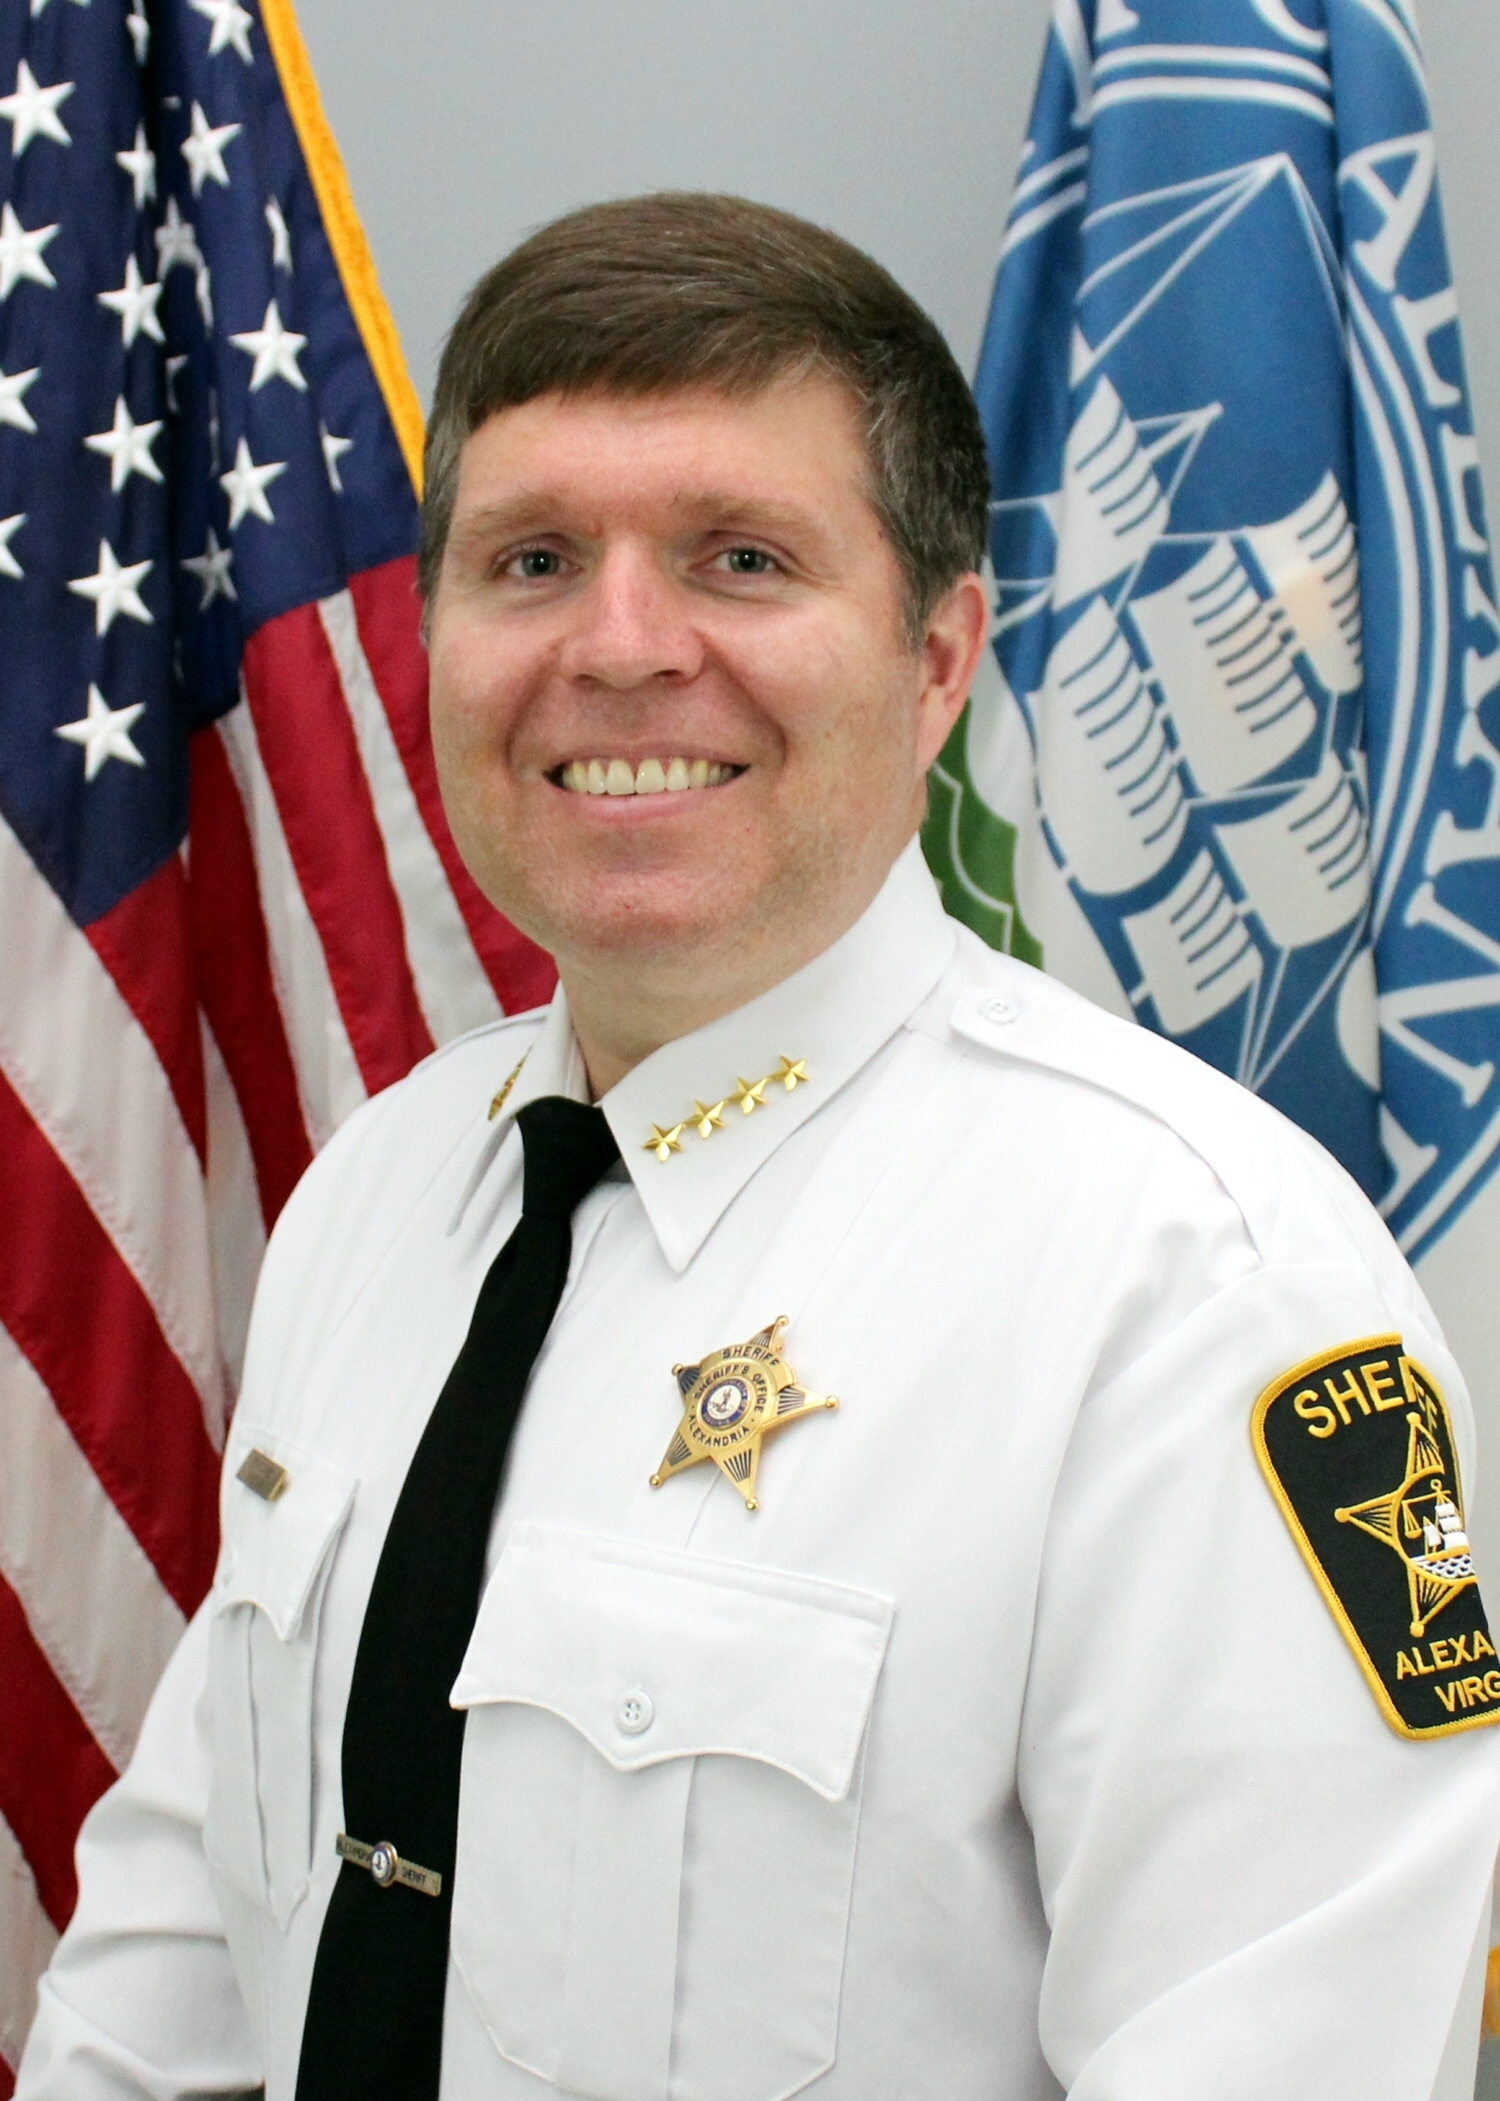 Casey Sworn in as Sheriff in Alexandria